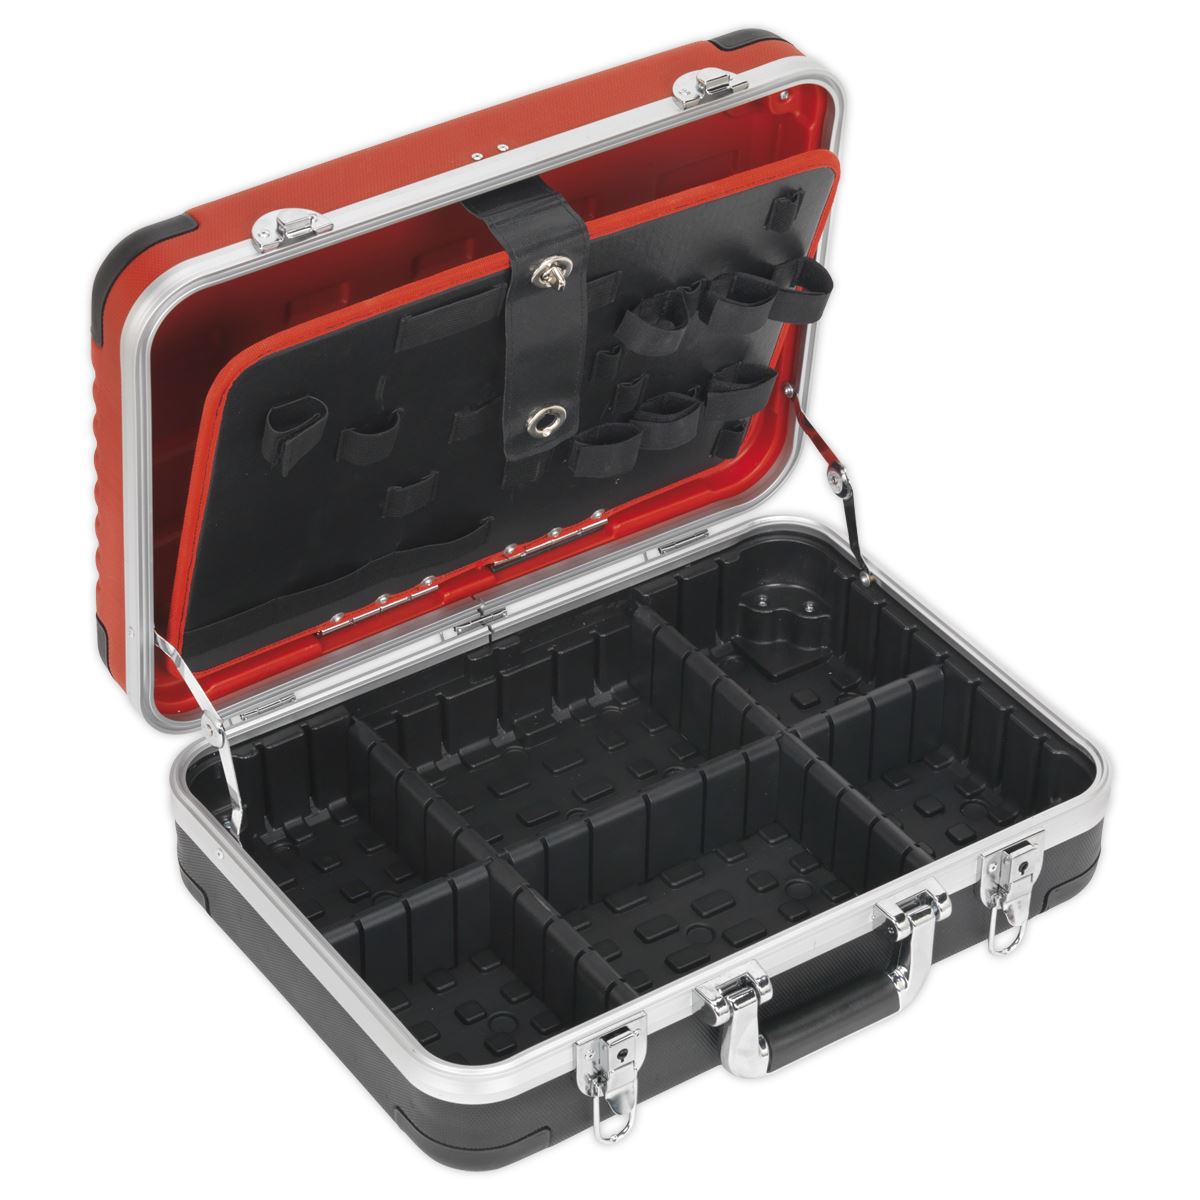 Sealey Professional HDPE Tool Case Heavy-Duty